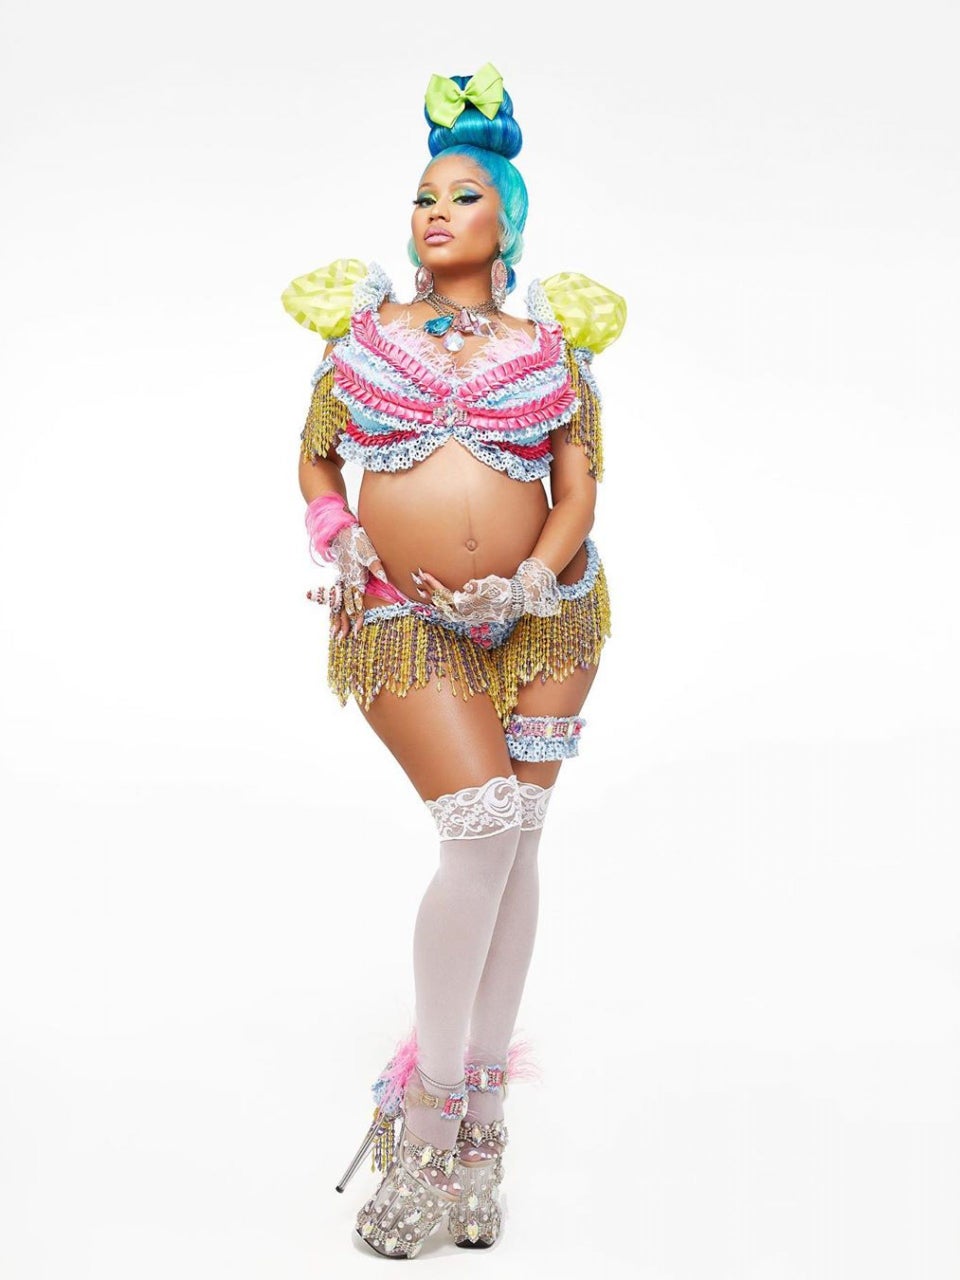 Nicki Minaj Introduced The World To Her Newborn Son Essence